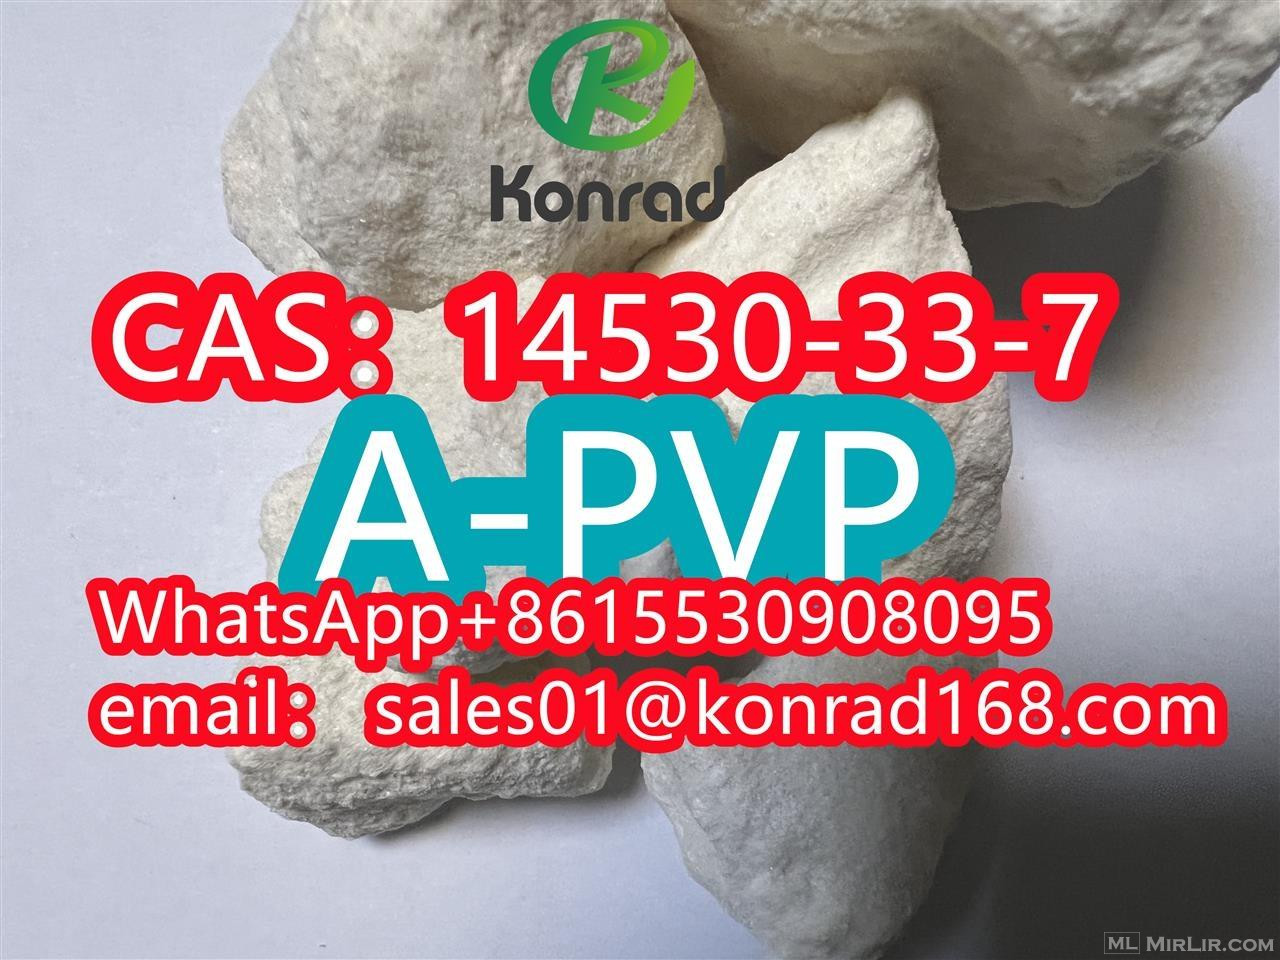 Alpha-PvP/A-PVPCAS：14530-33-7